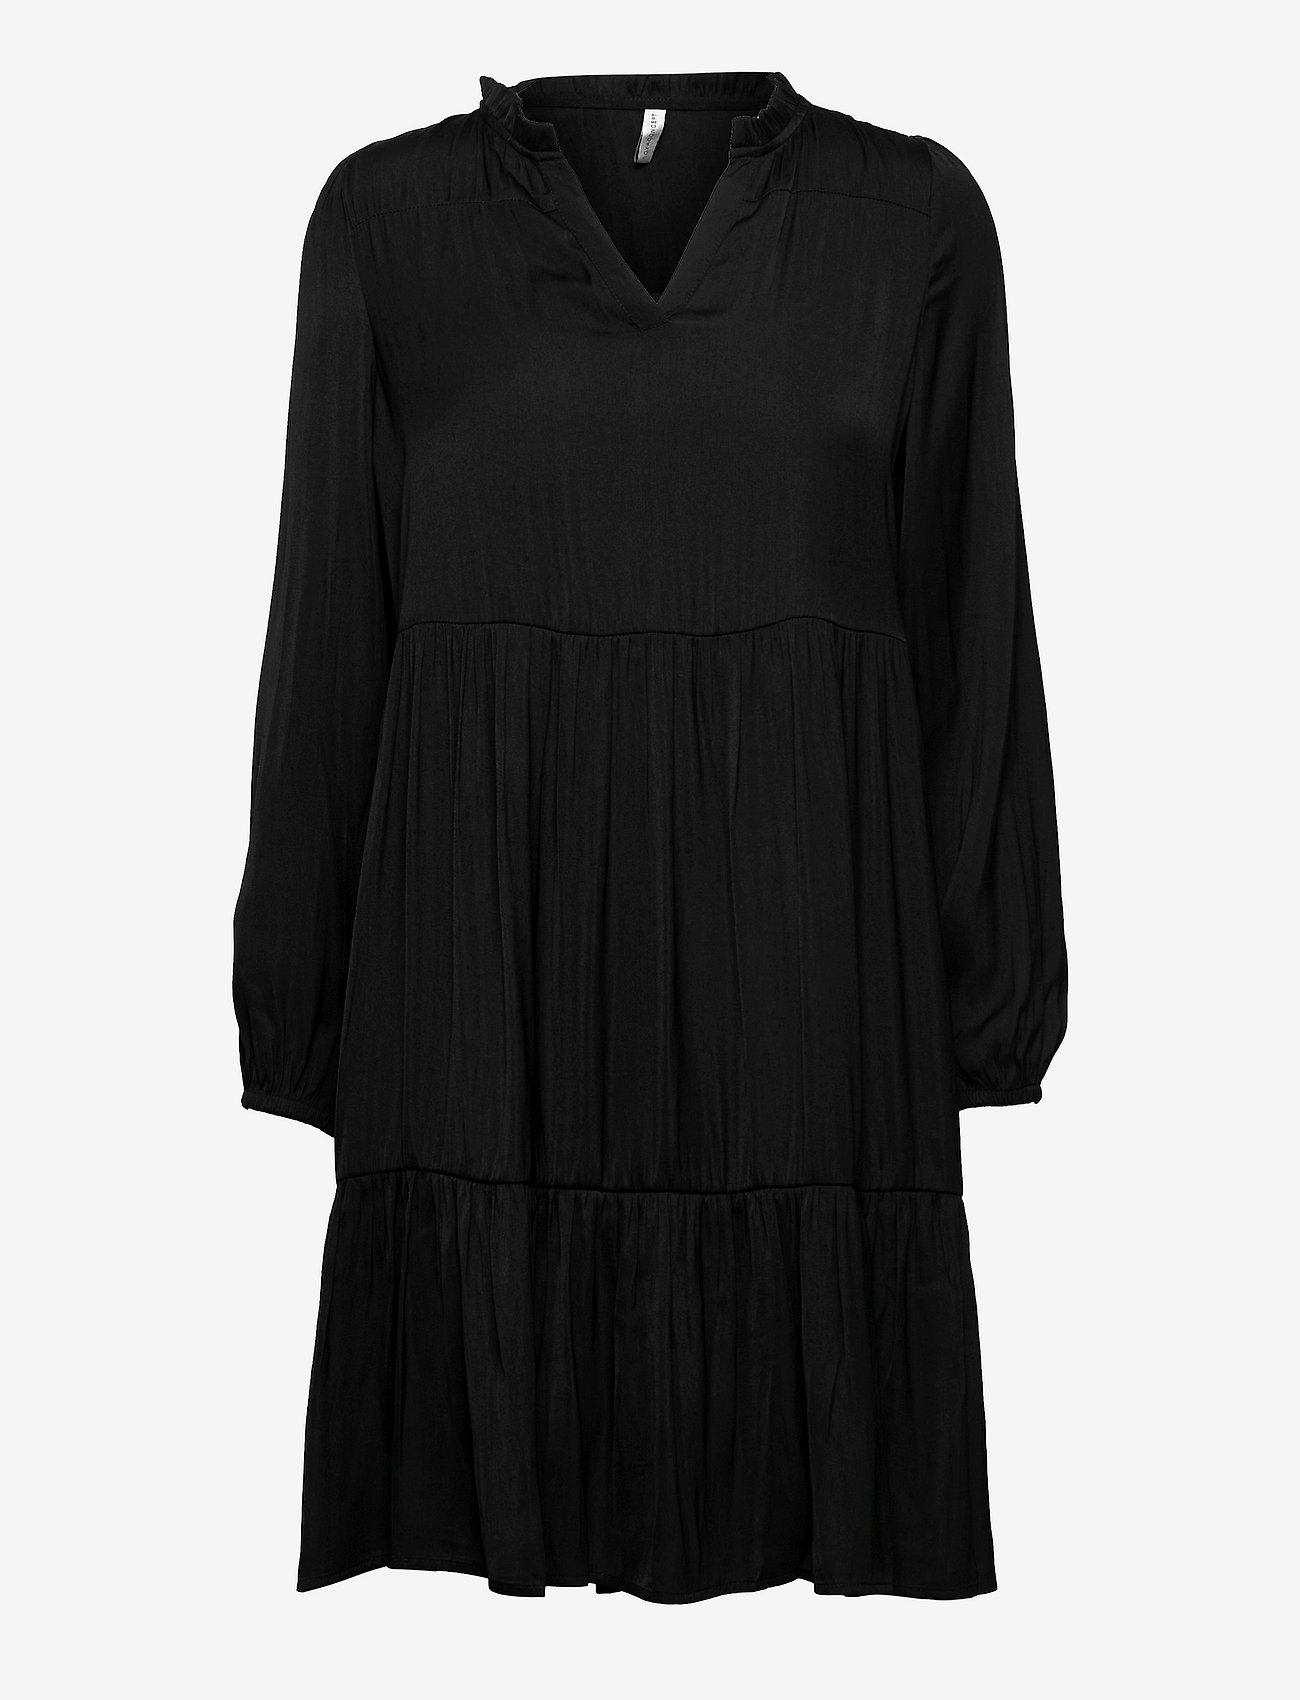 Soyaconcept - SC-PAMELA - short dresses - black - 0